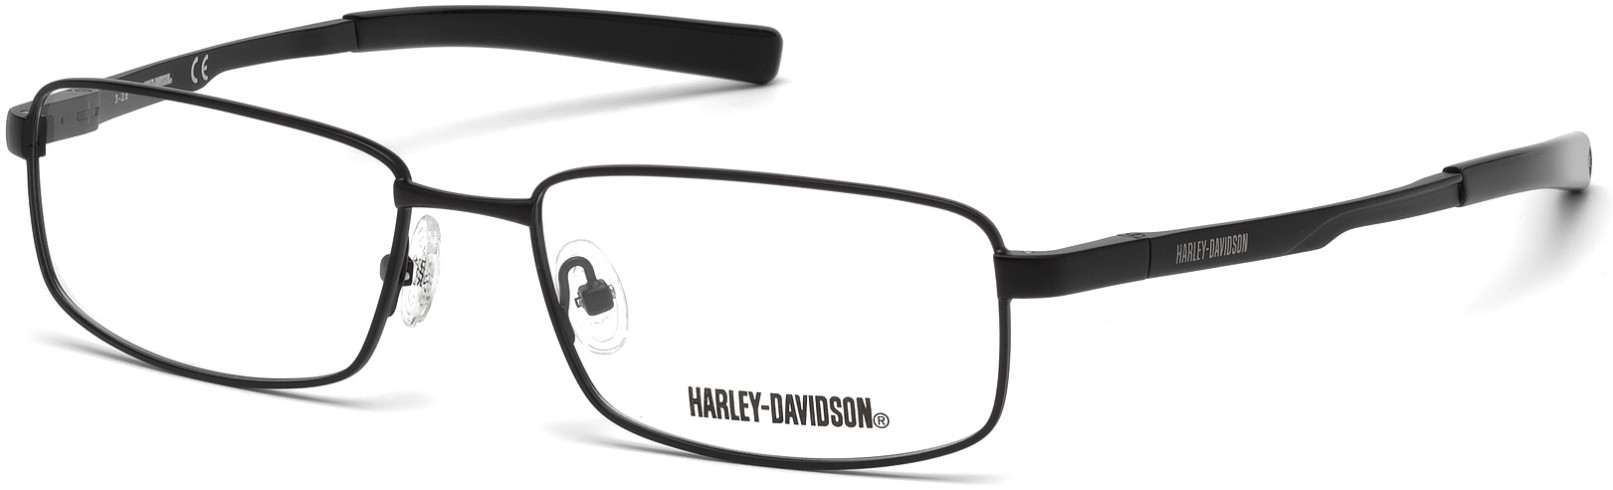 HARLEY DAVIDSON 0754 002